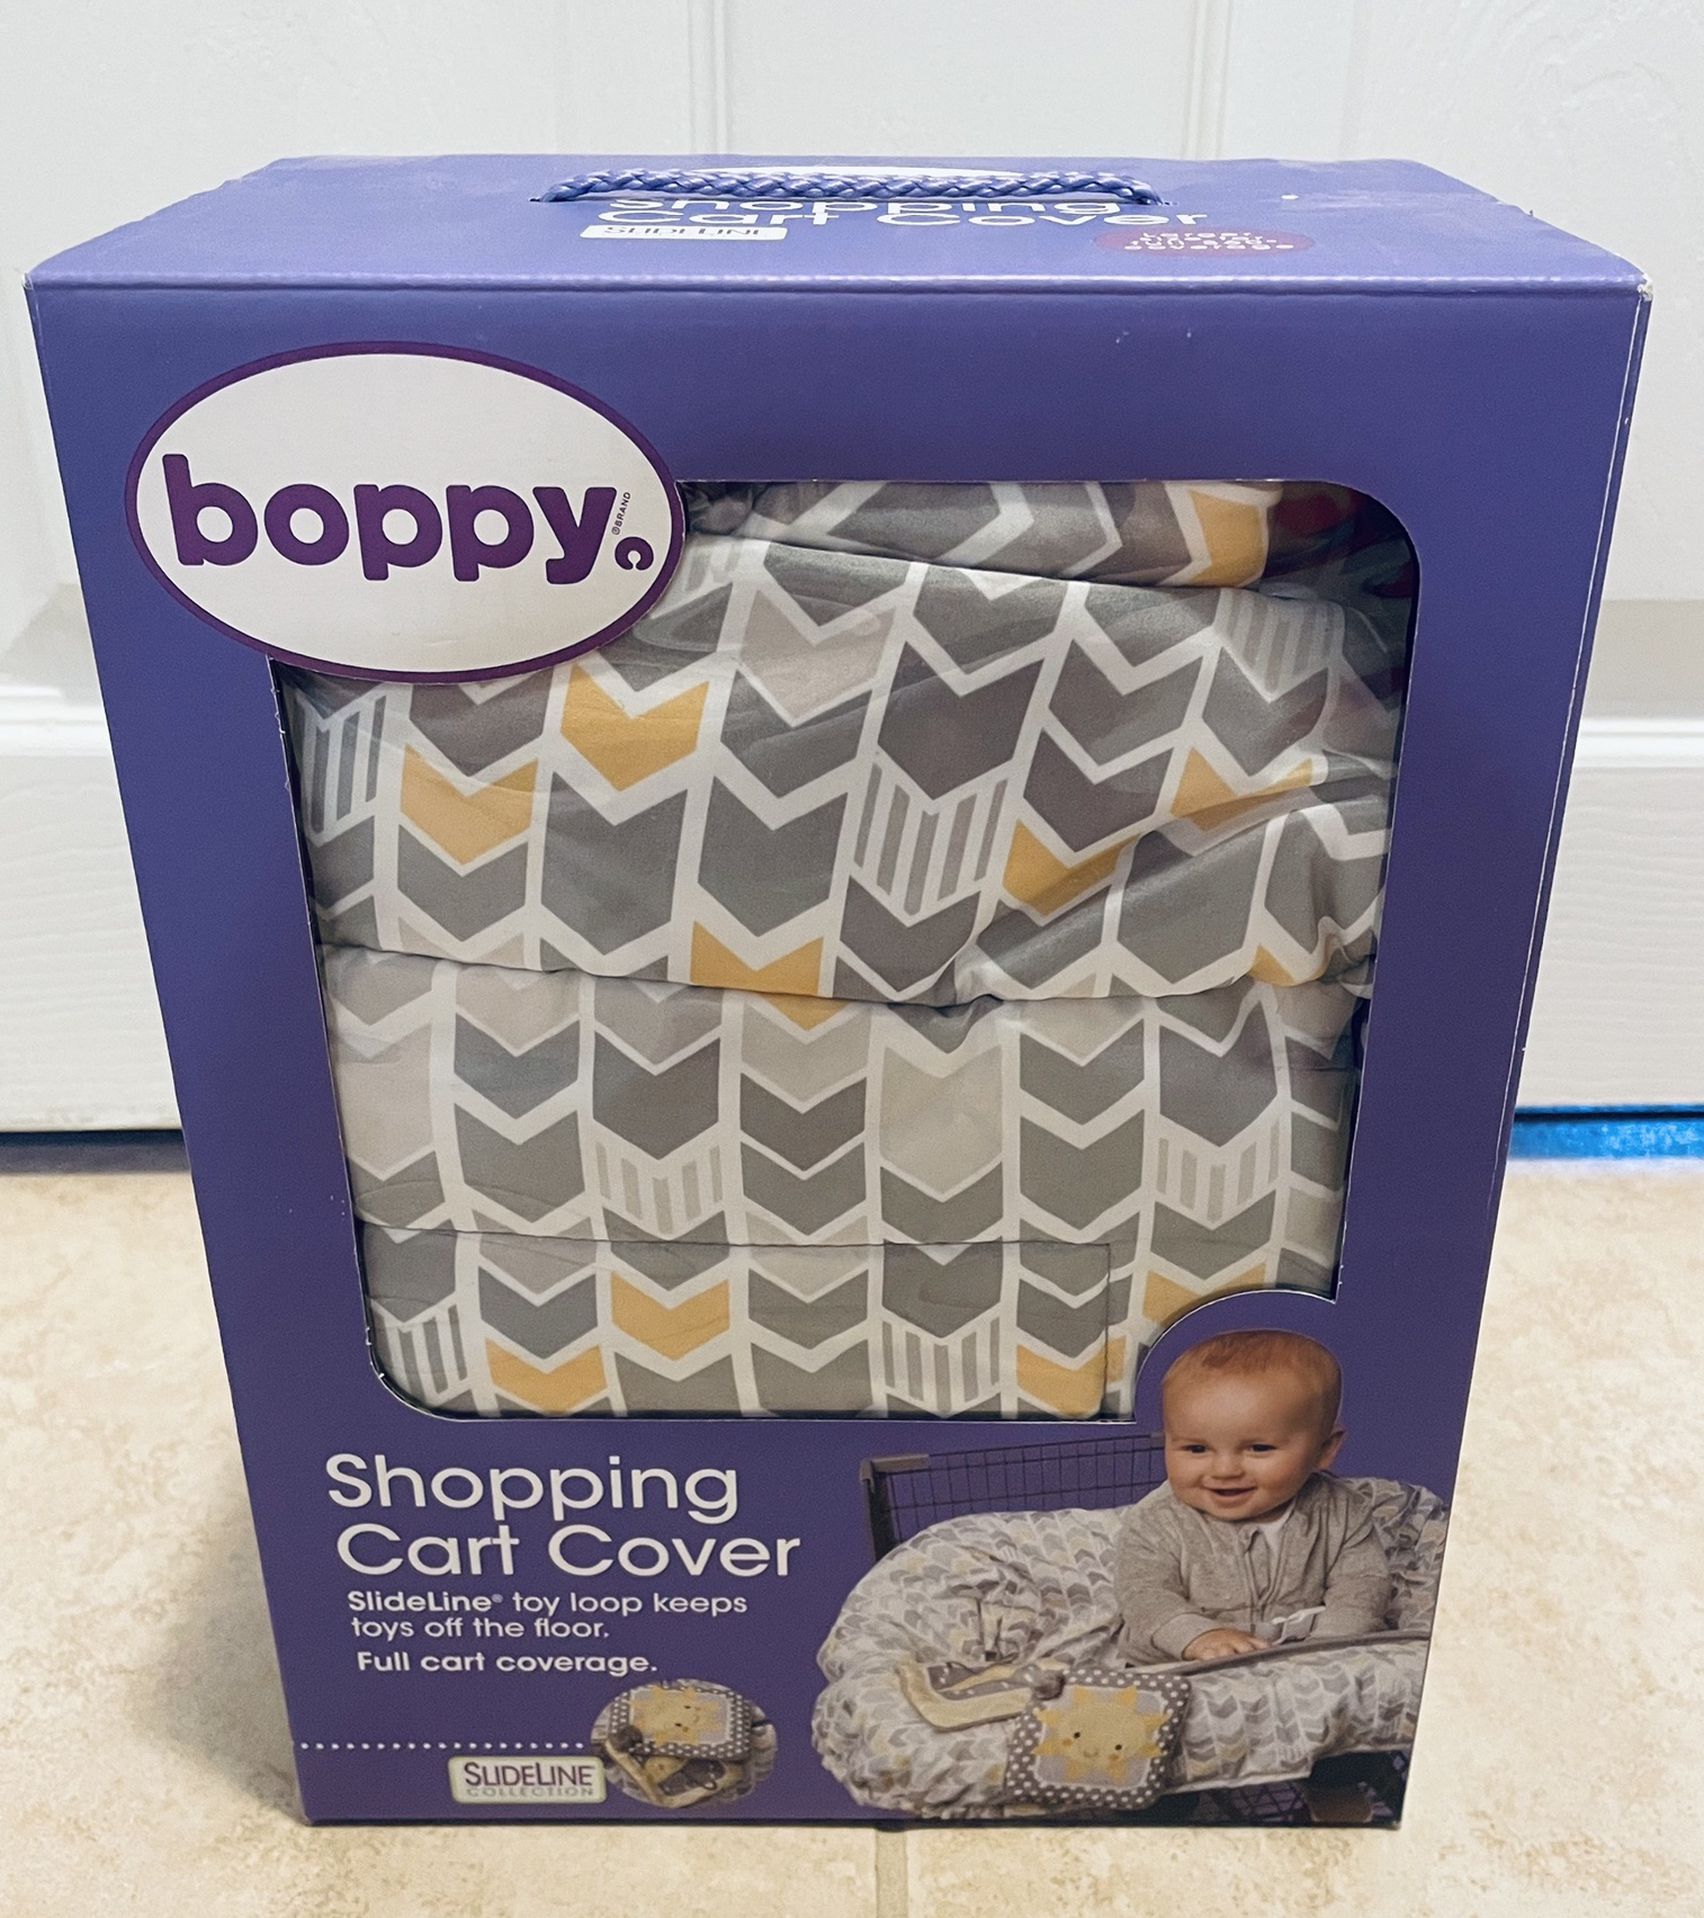 Boppy Baby Shopping Cart Cover in Sunshine